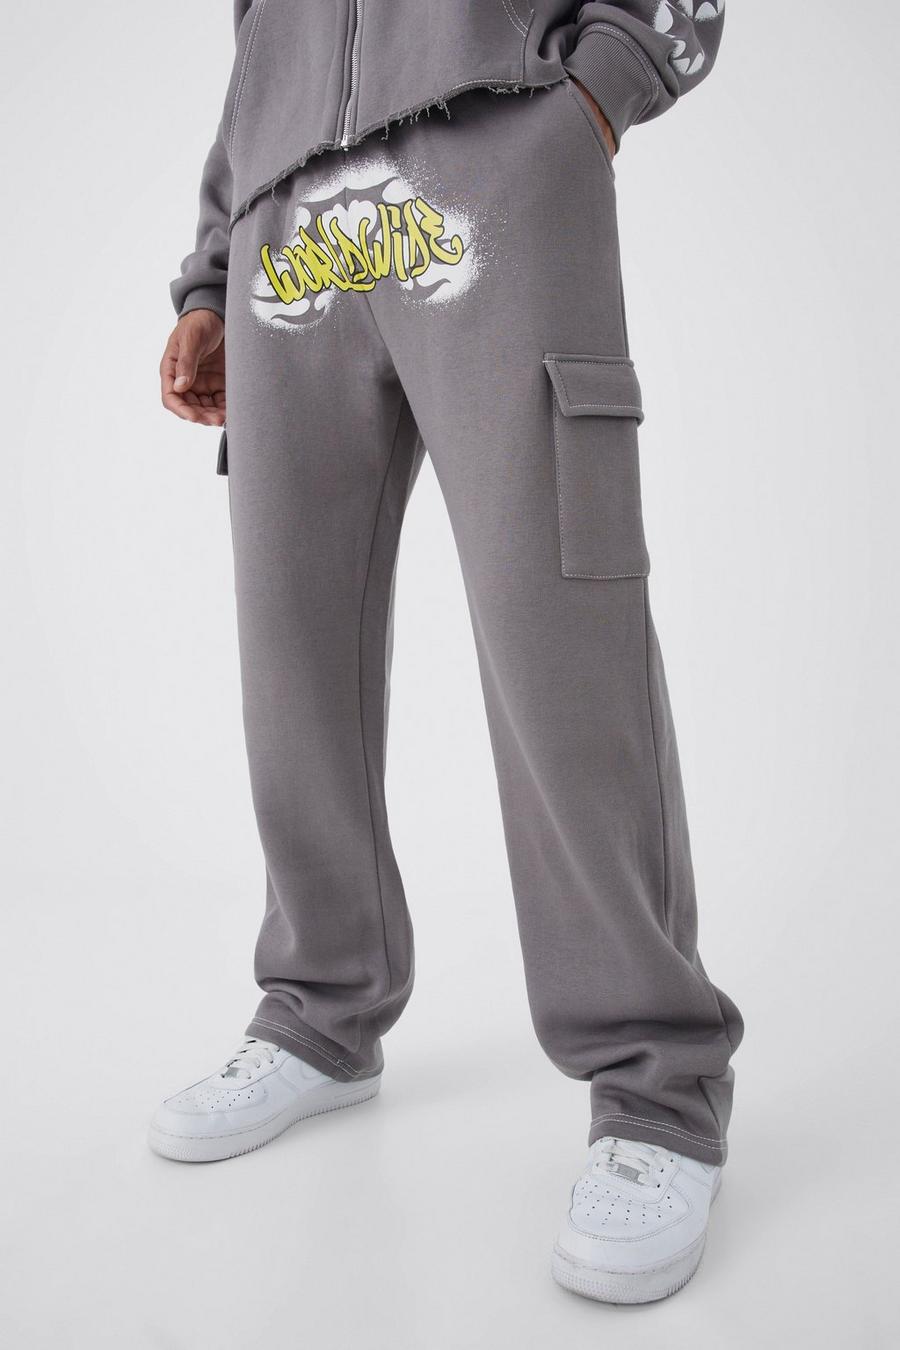 Pantaloni tuta Tall rilassati Worldwide stile Graffiti stile Cargo, Mid grey image number 1